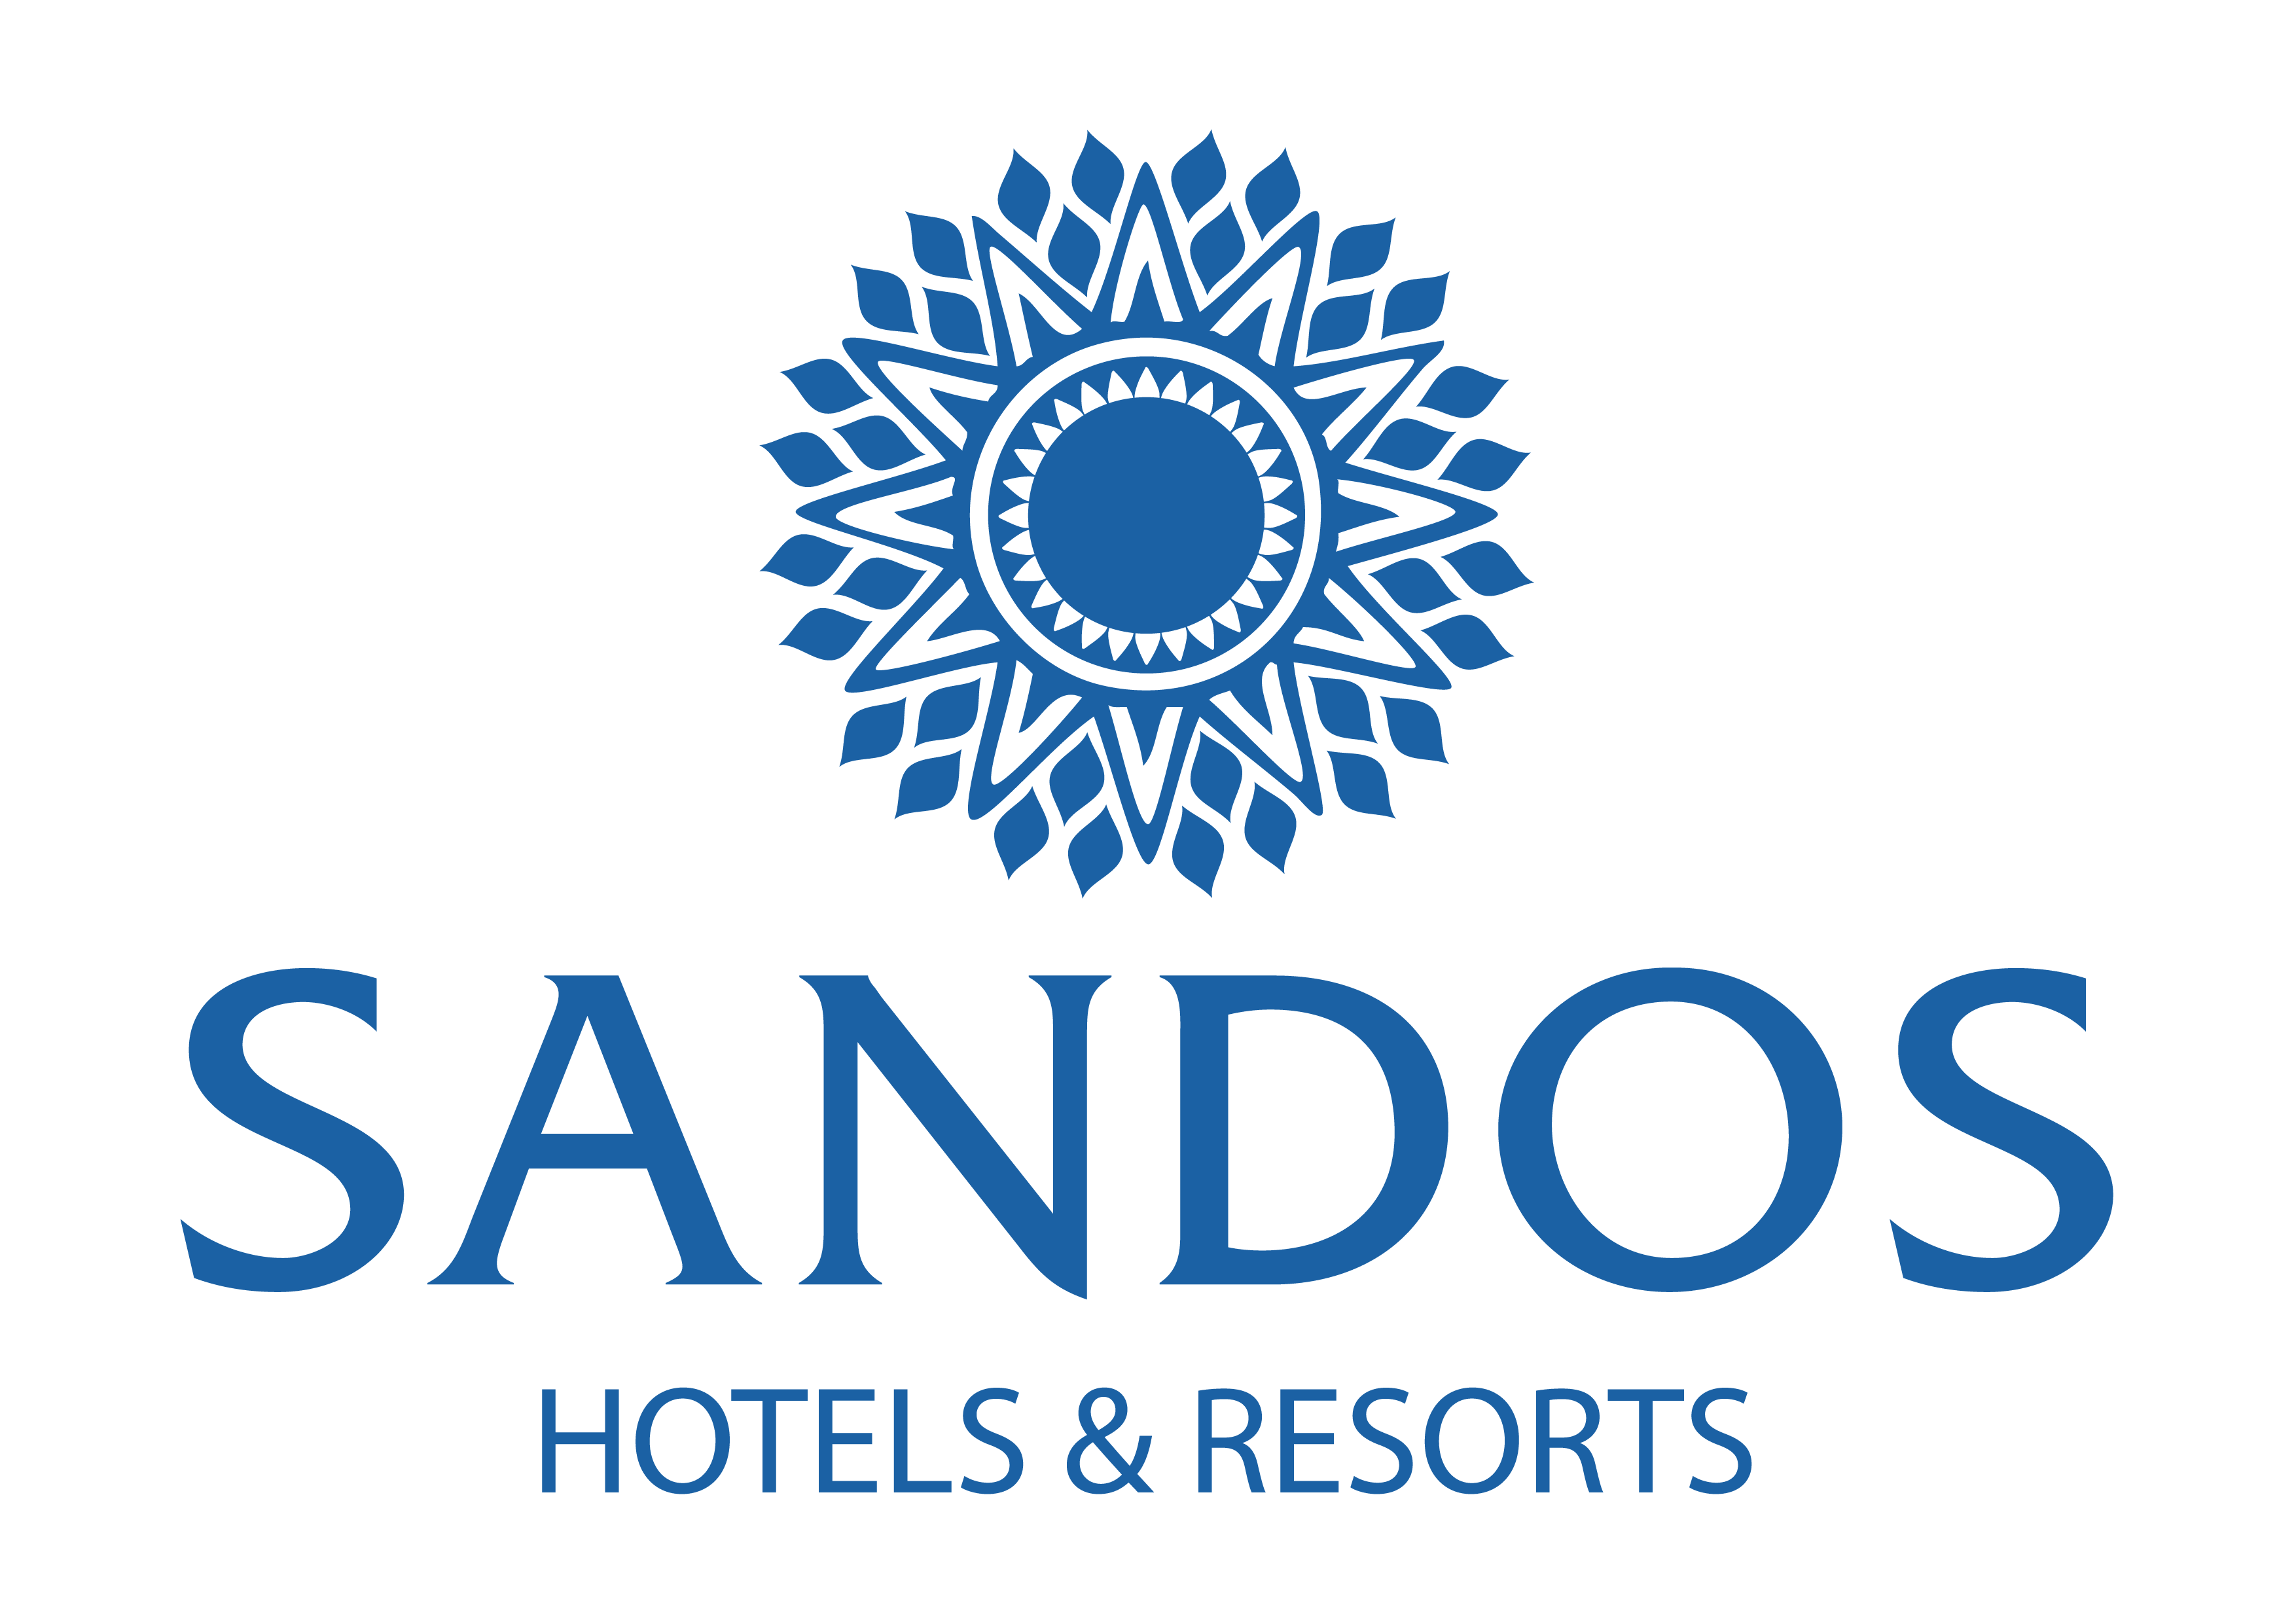 Re-Branding_Sandos_Hotels&Resorts_VERT.png